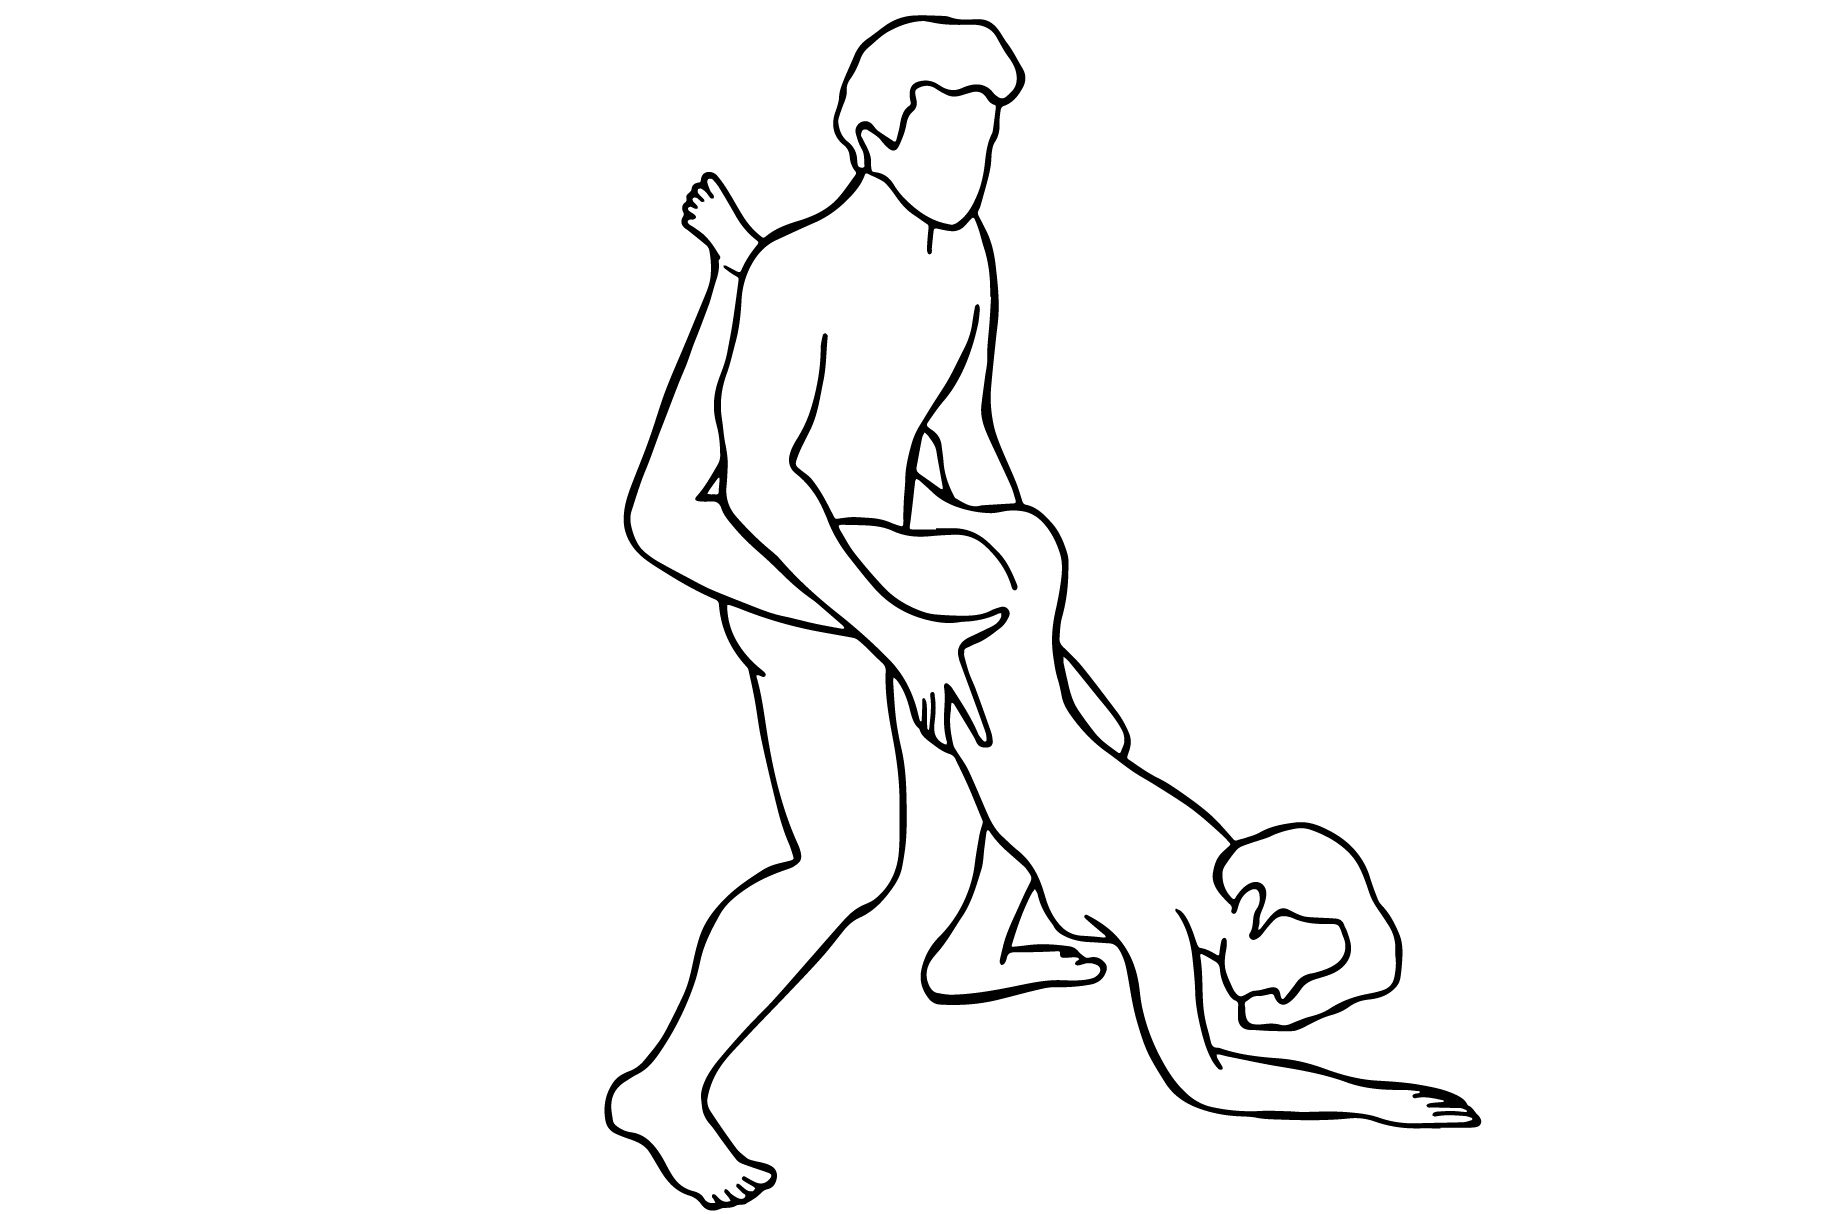 Illustration of standing wheelbarrow doggy style sex position